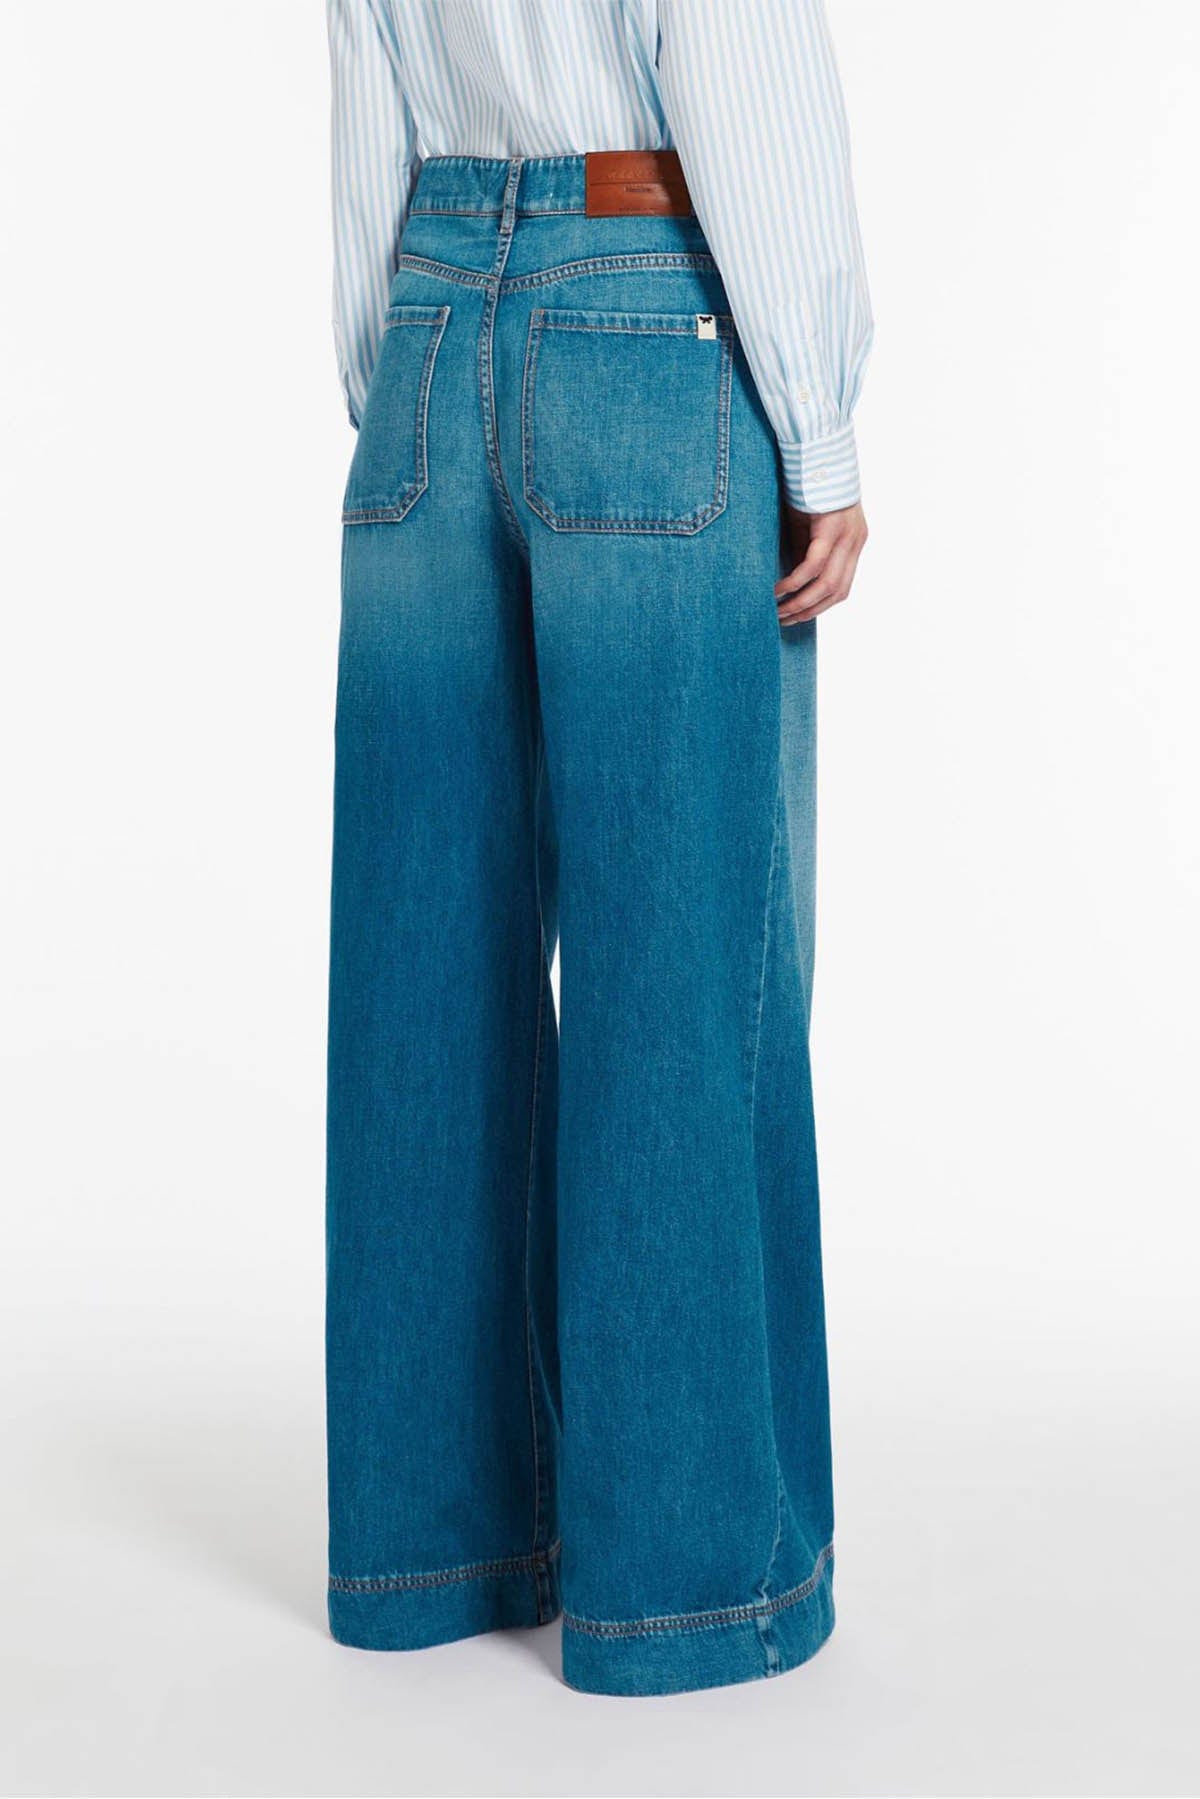 MAXMARA'S BRANDS PANTALONE IN DENIM  BLUE JEANS / 34 Jeans Over Donna Max Mara Weekend Vega